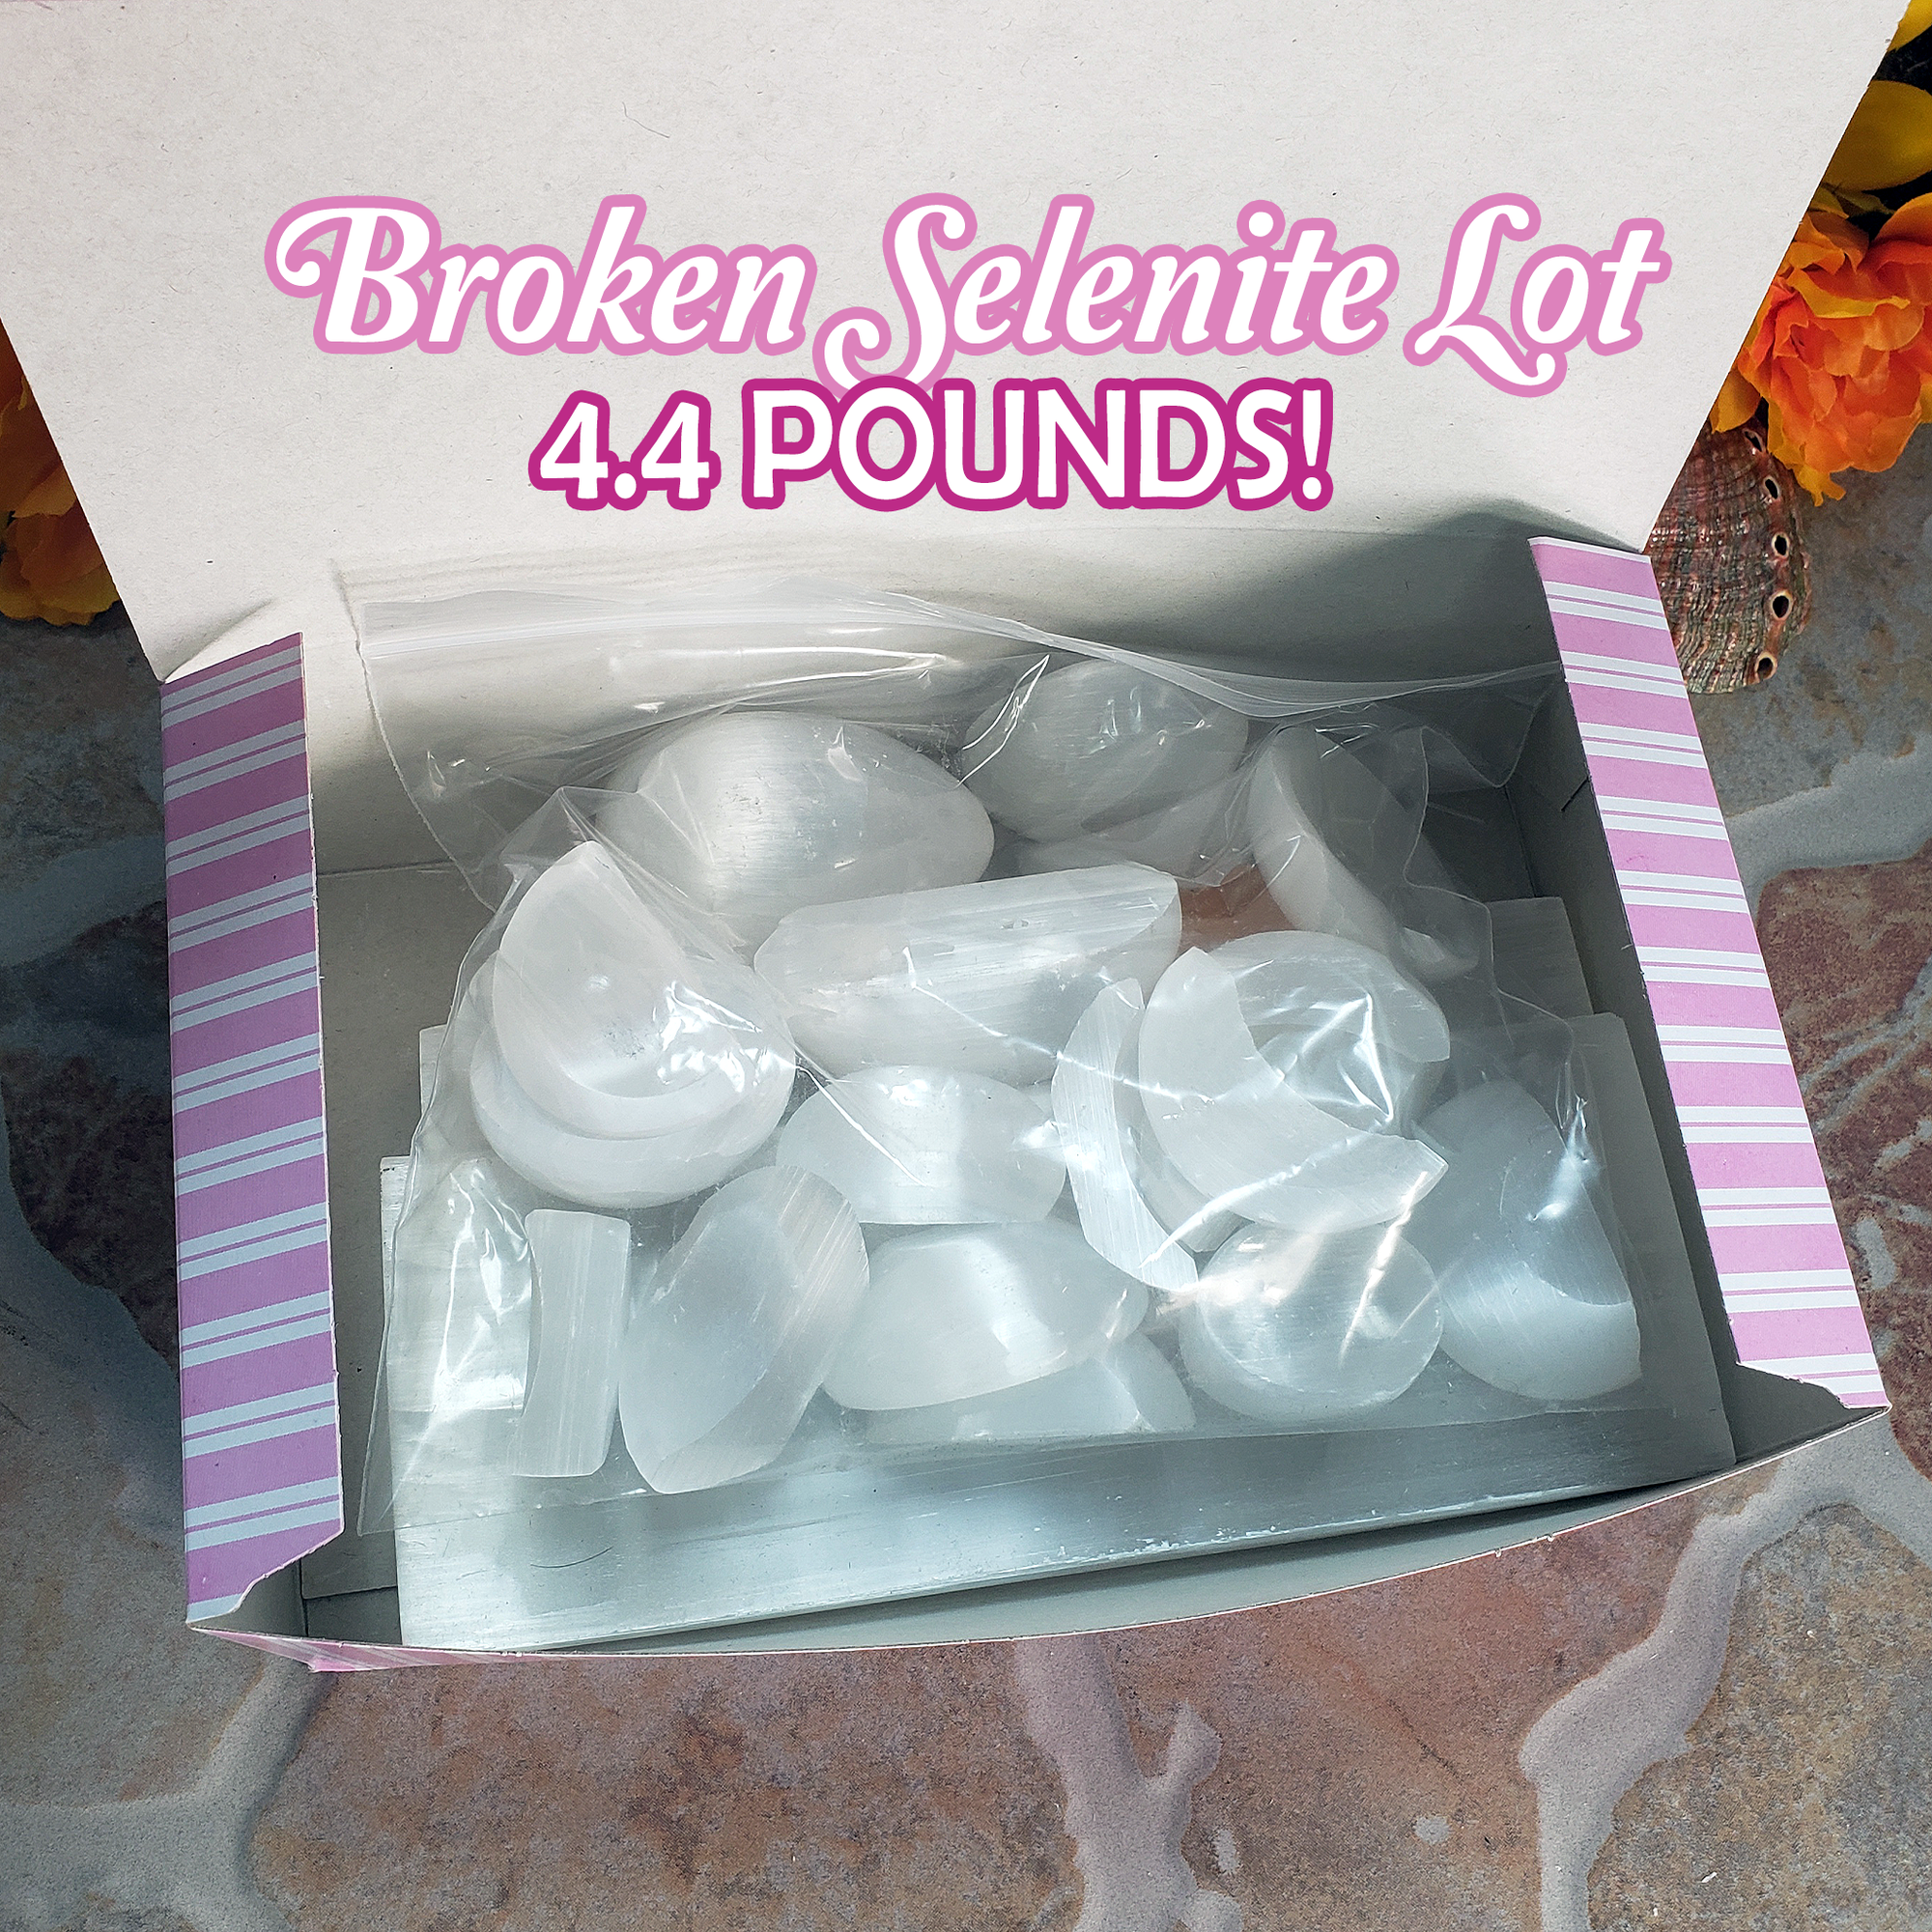 4.4 POUNDS BROKEN SELENITE BLIND BOX - Lot of Broken Selenite - Great for Arts &amp; Crafts!